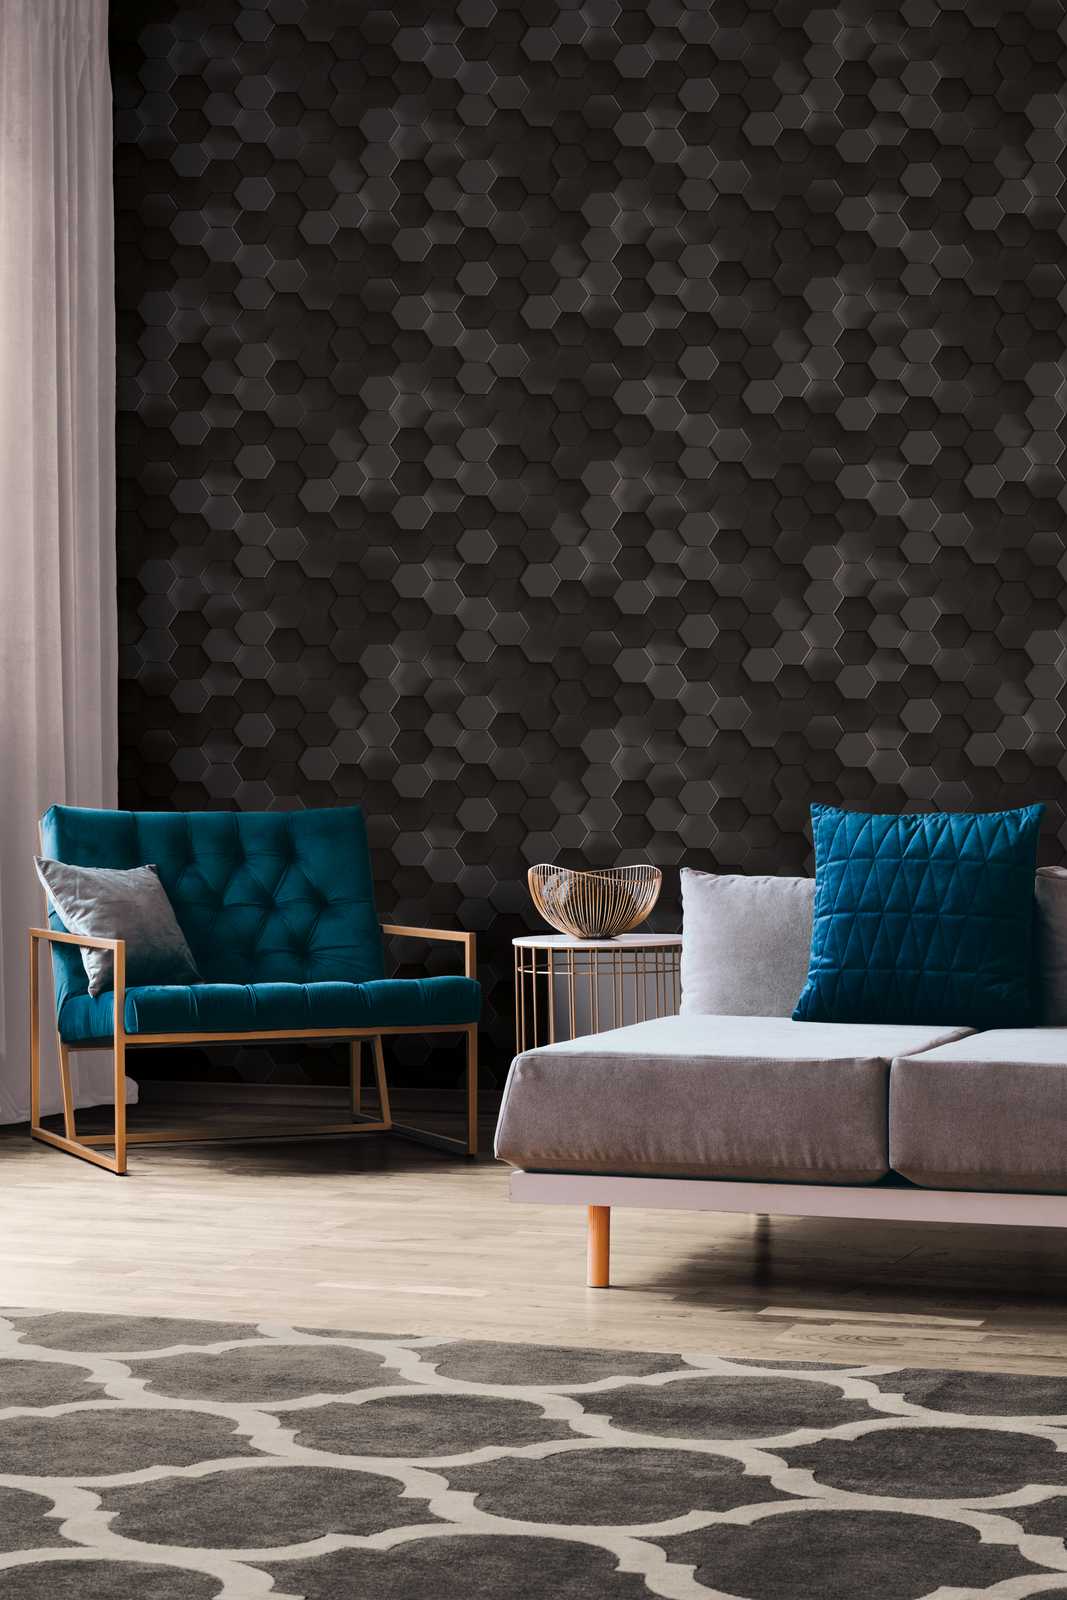             Hexagon 3D wallpaper graphic pattern honeycomb - grey, black
        